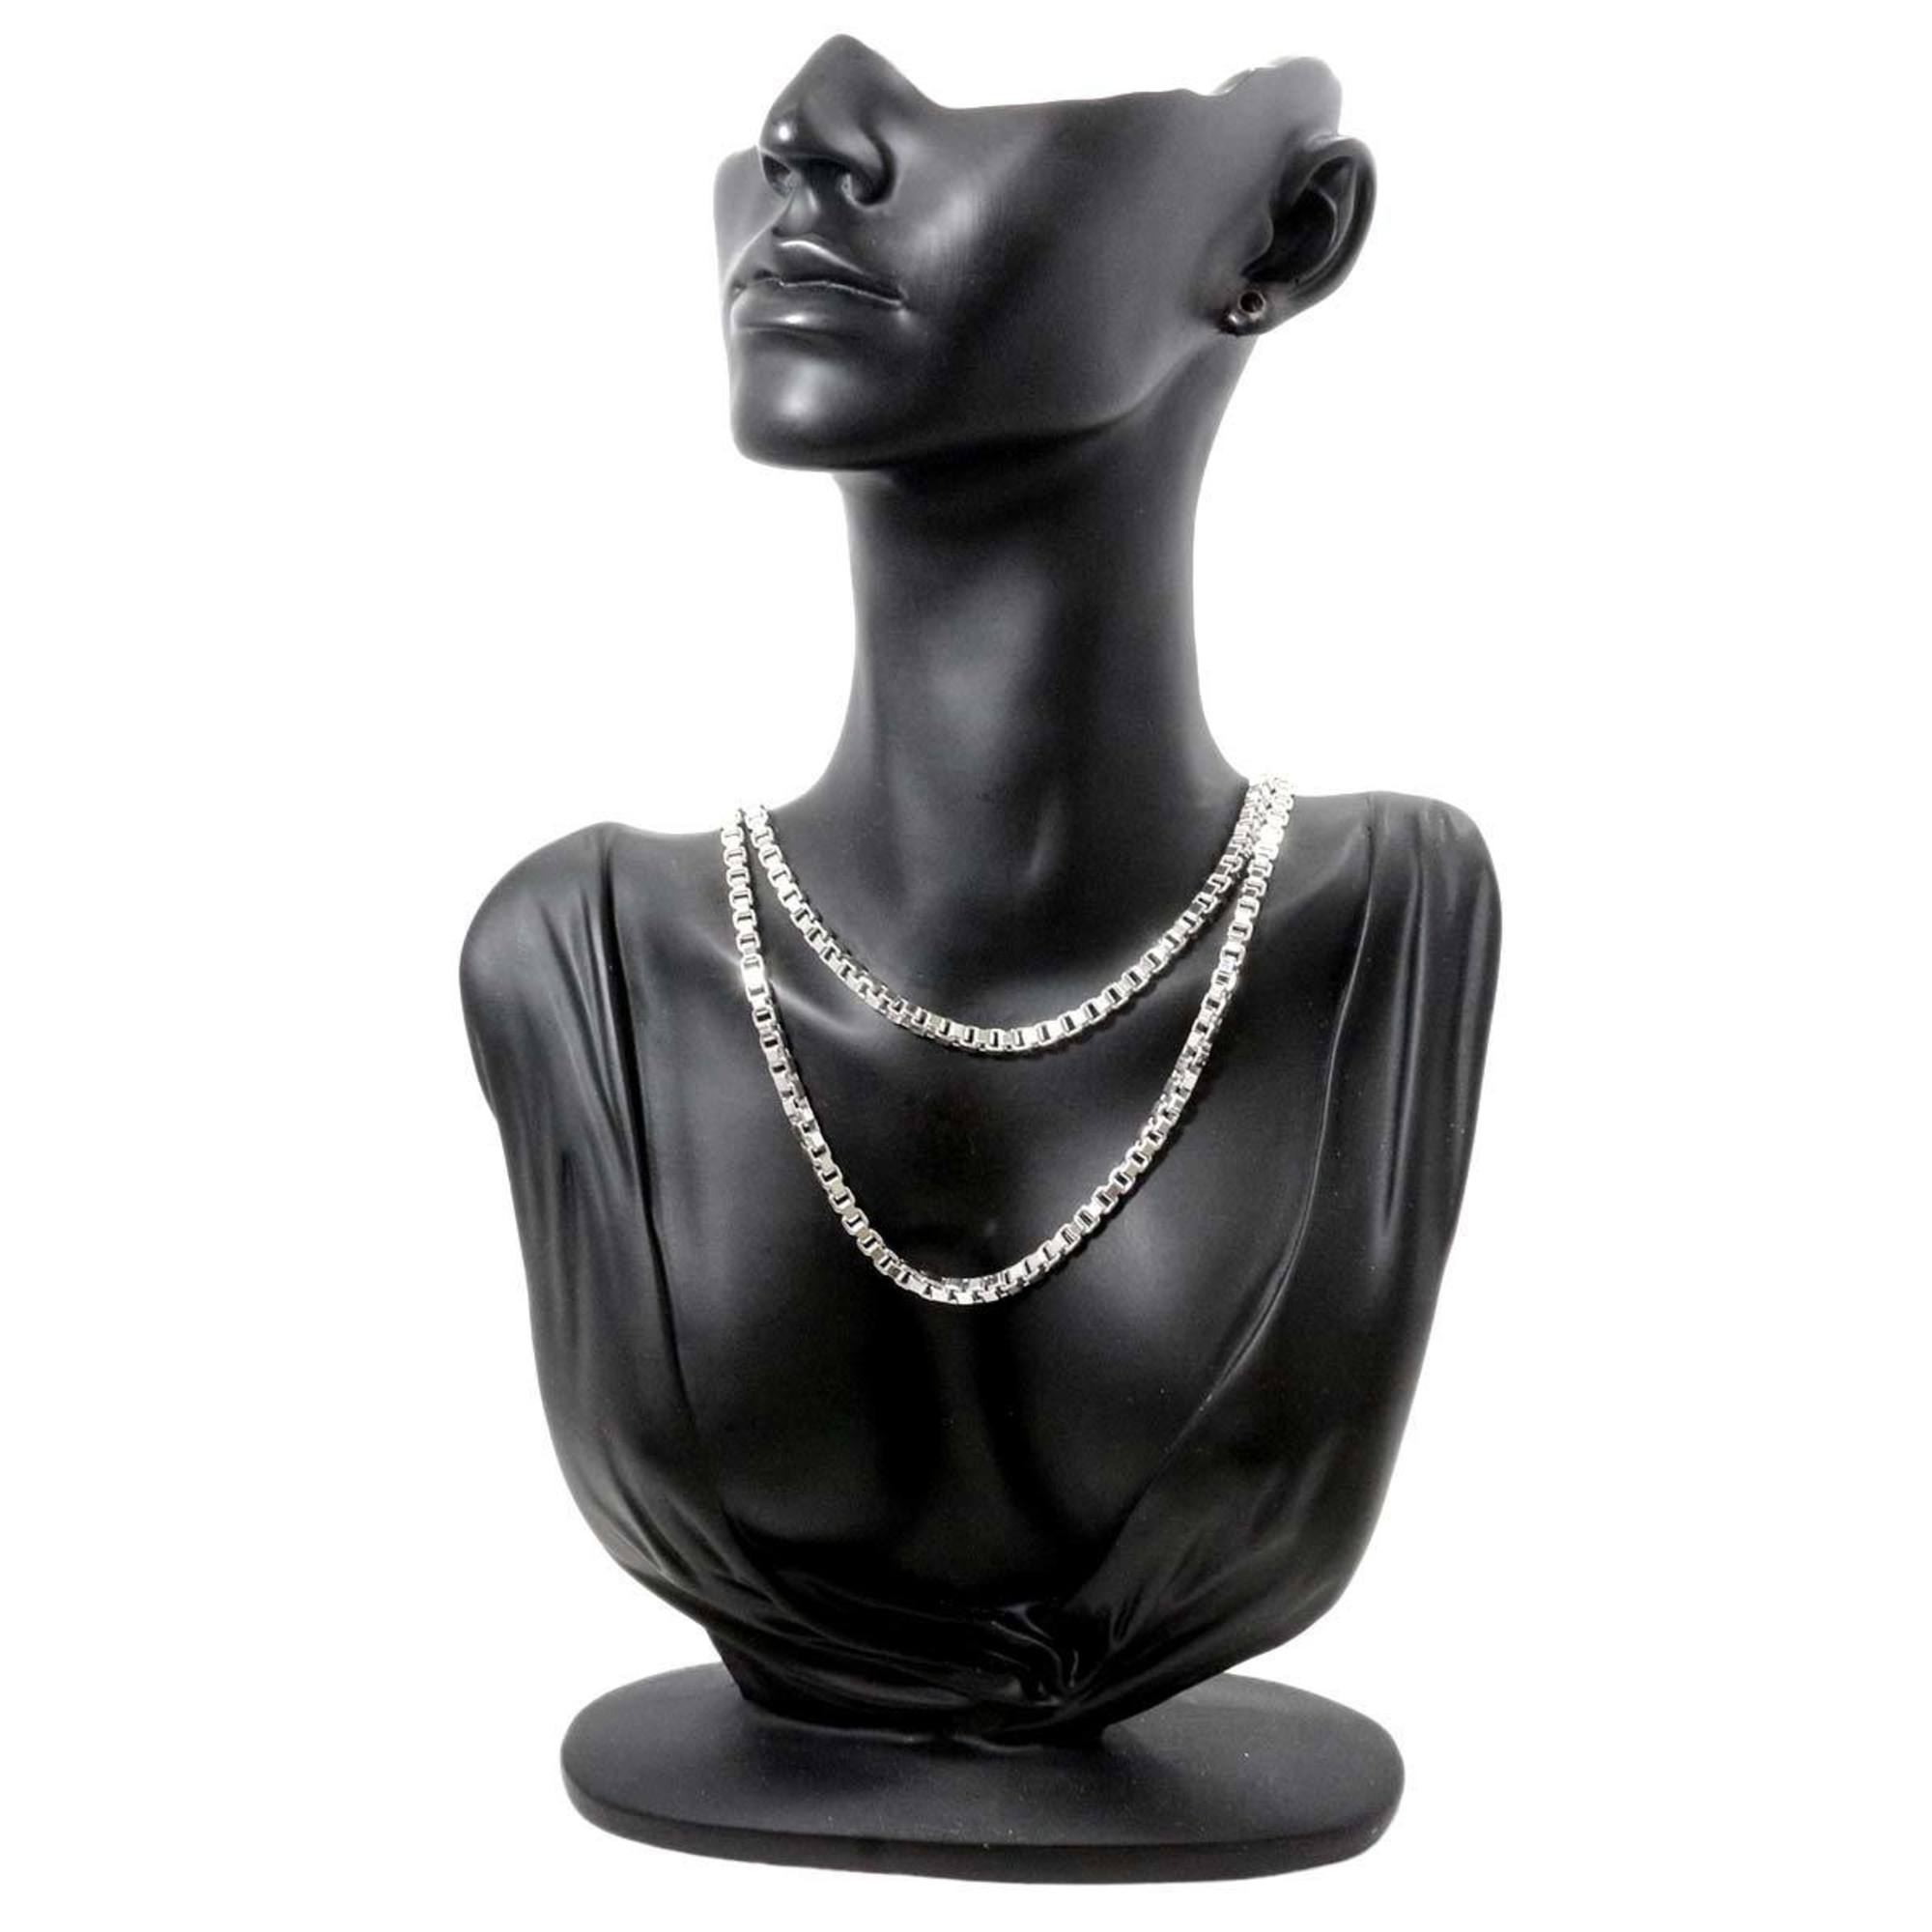 Tiffany & Co. Venetian Long Necklace 92cm SV 925 Silver